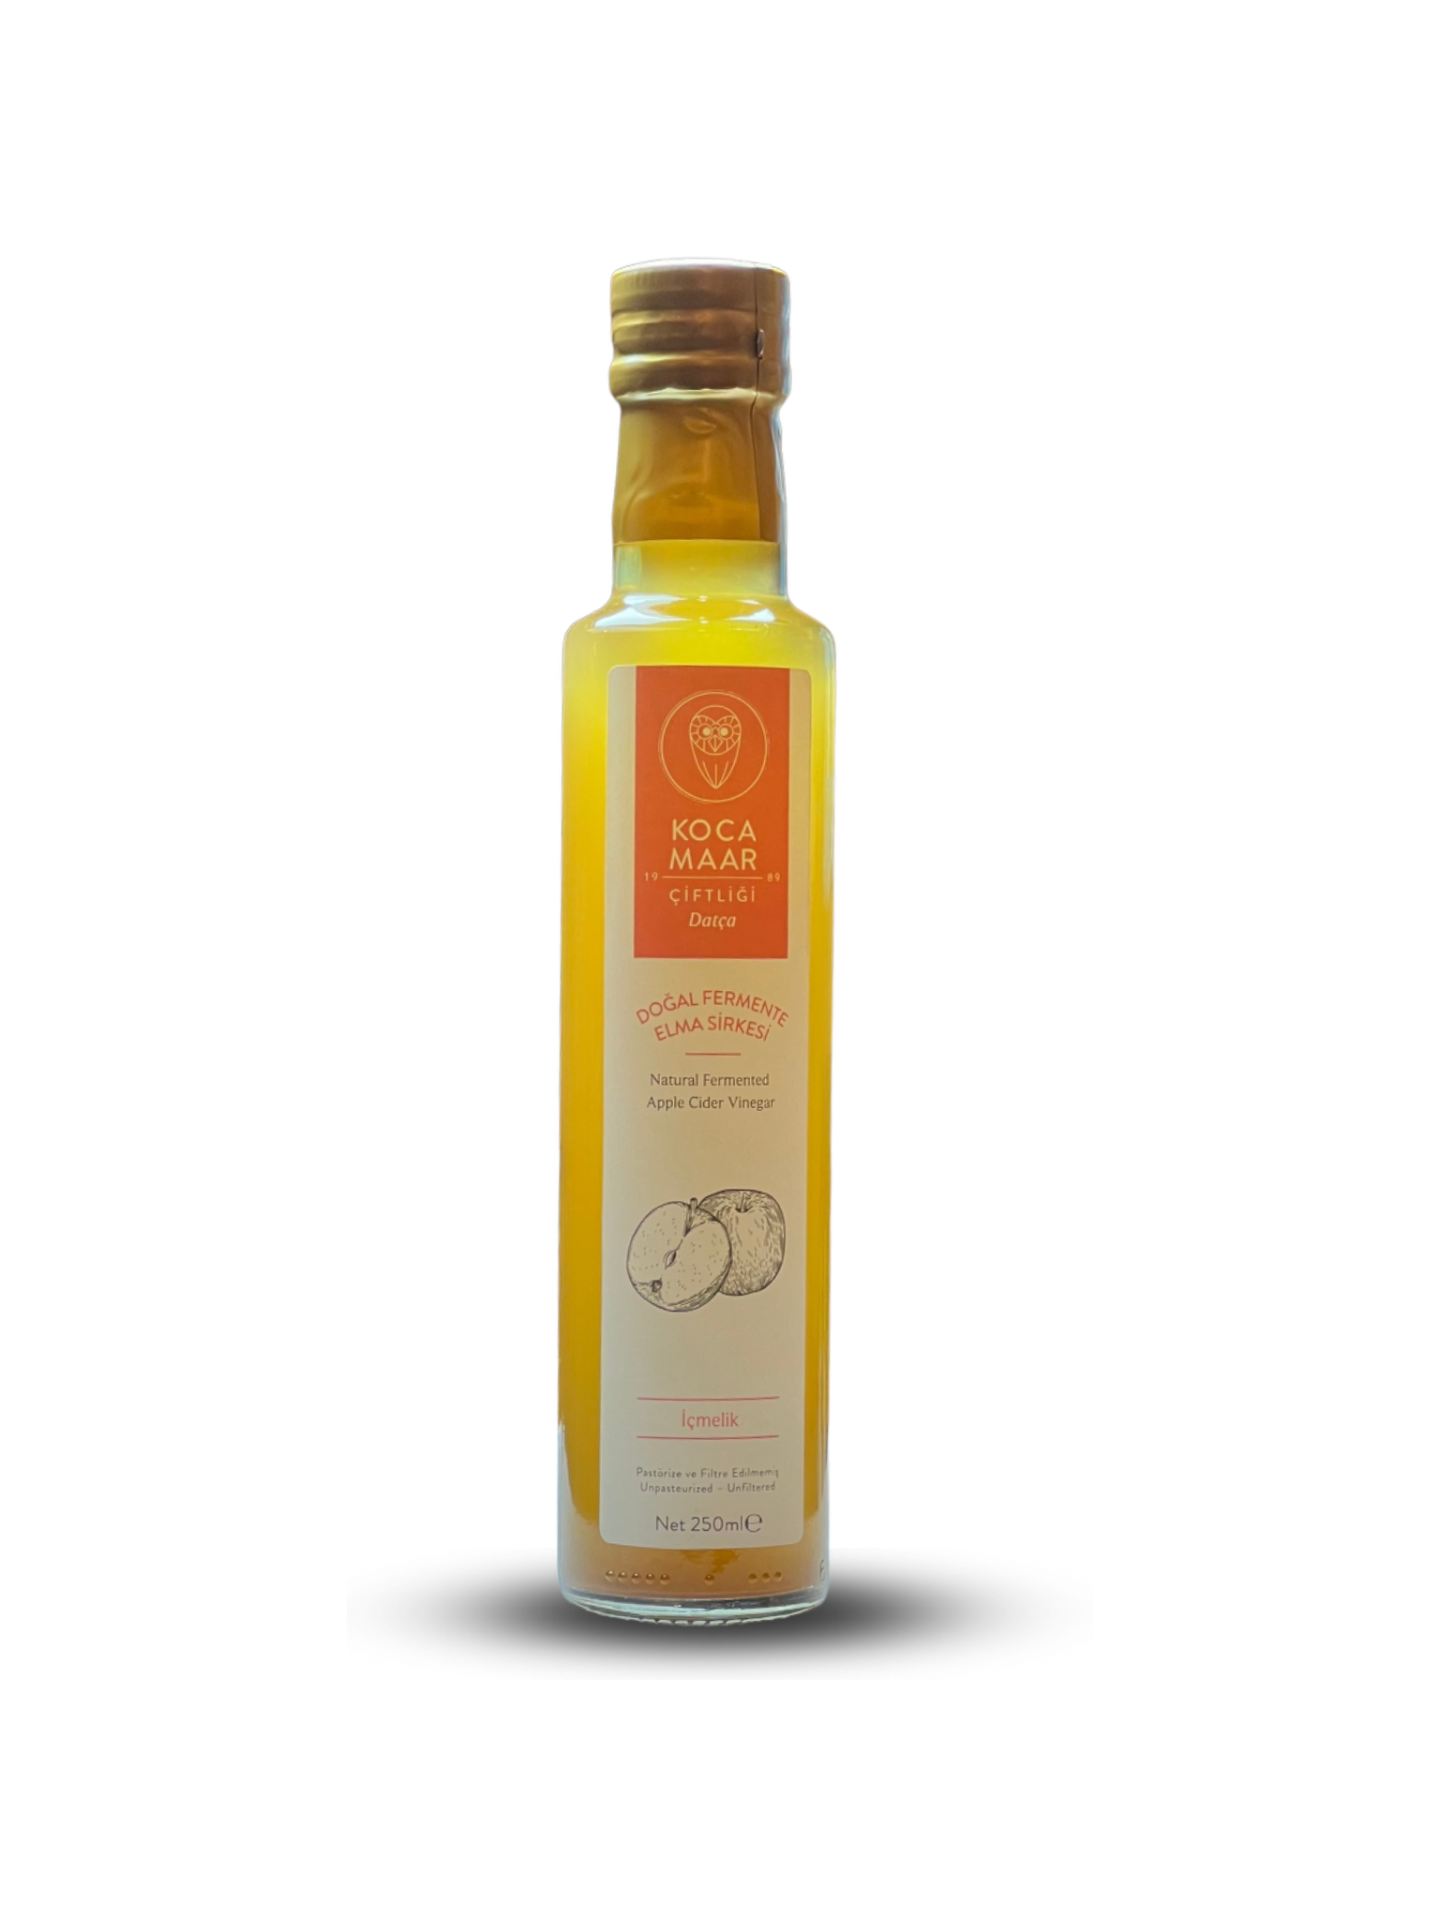 KOCAMAAR ELMA SİRKESİ DOĞAL FERMANTE (Apple cider vinegar natural fermented ) İÇMELİK 250 ml